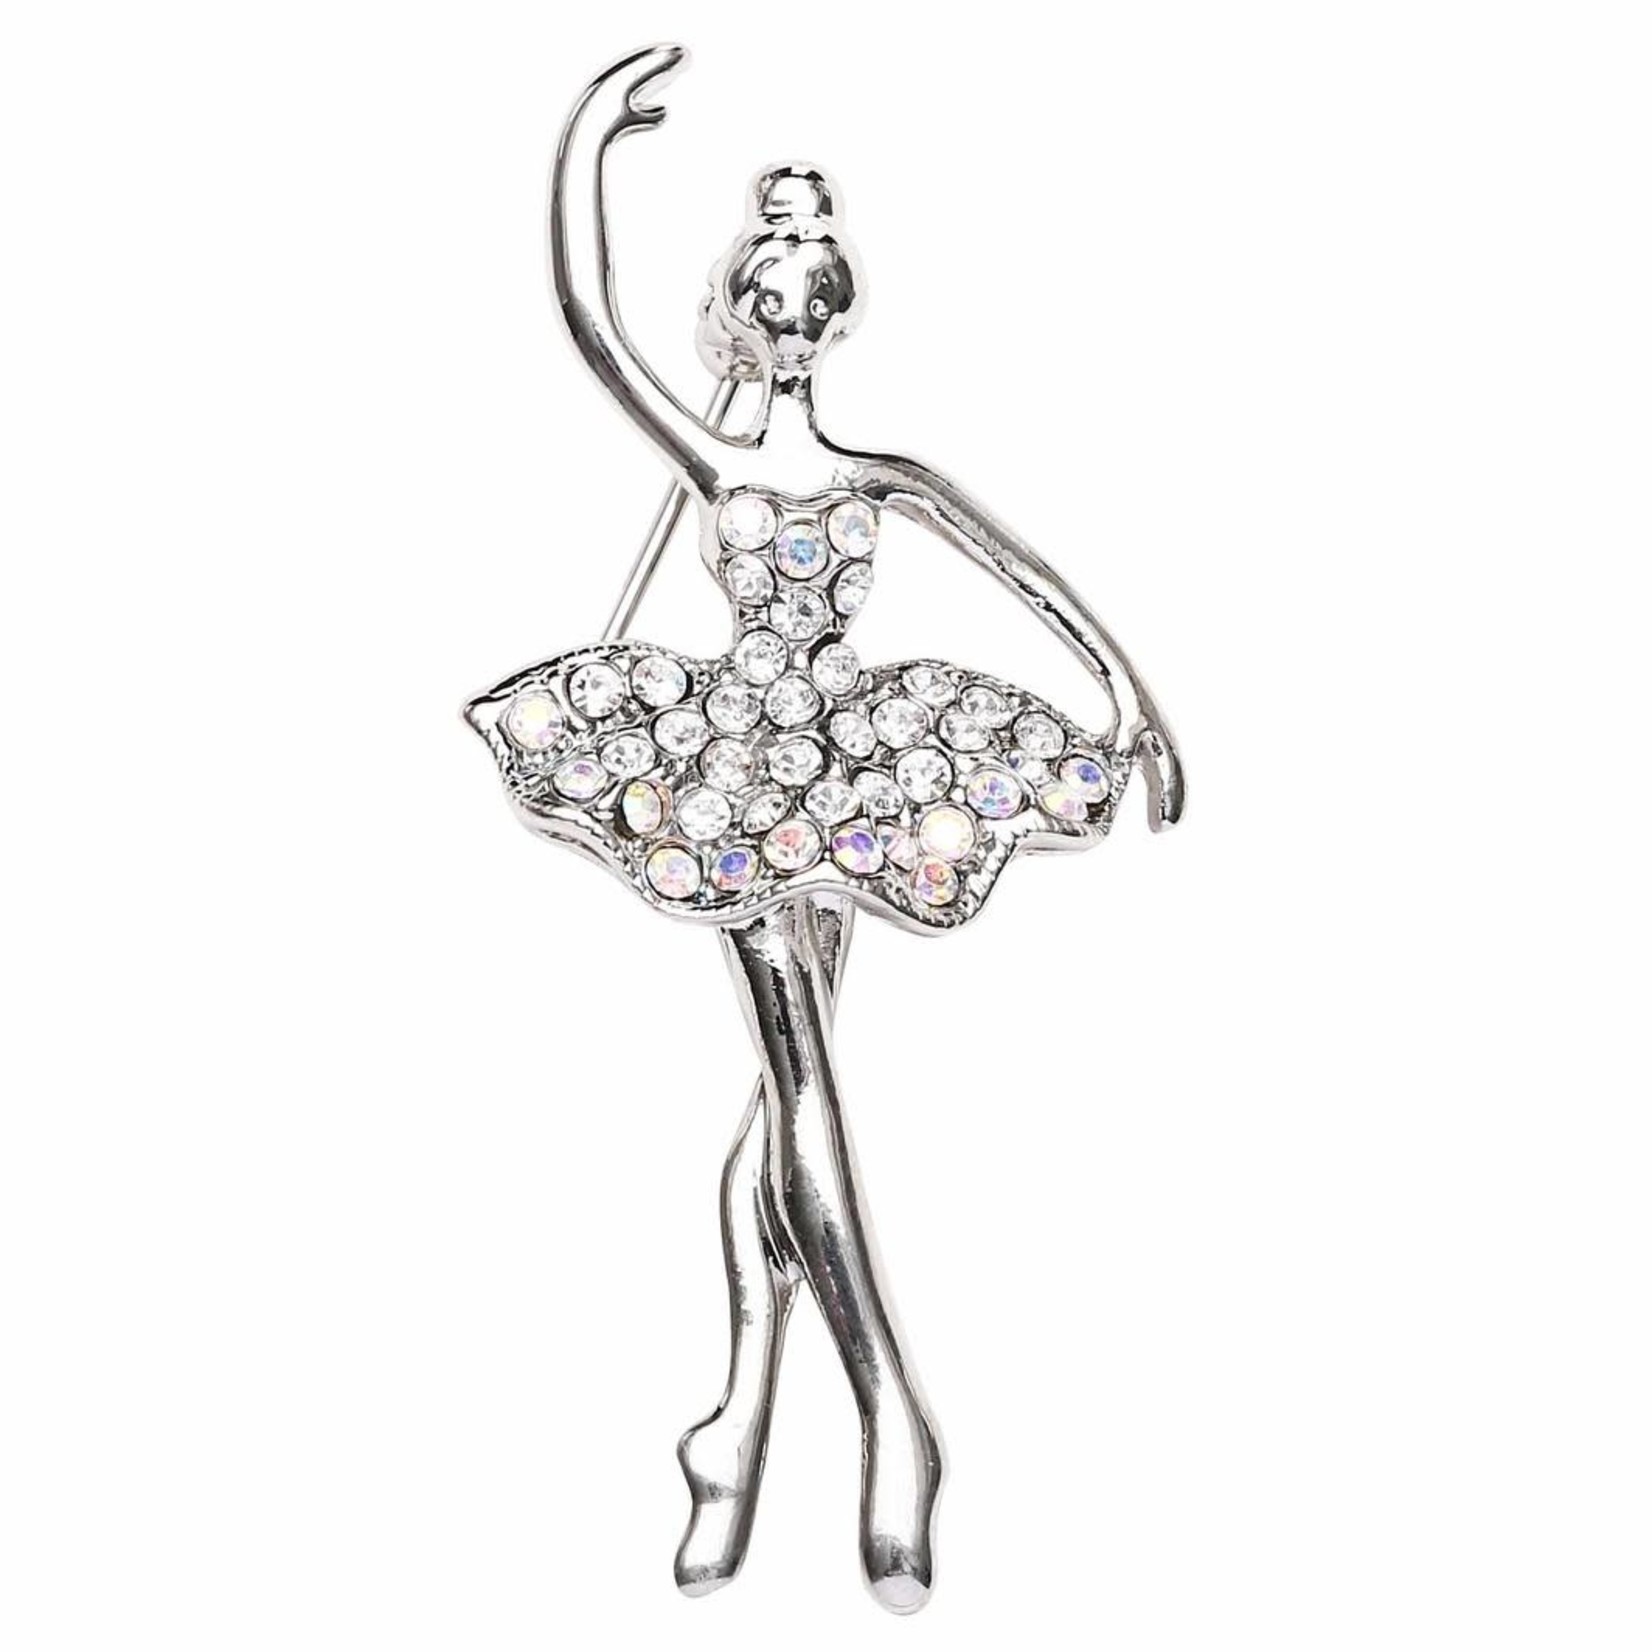 Zizu Silver & Diamonte Crystal Ballerina Brooch